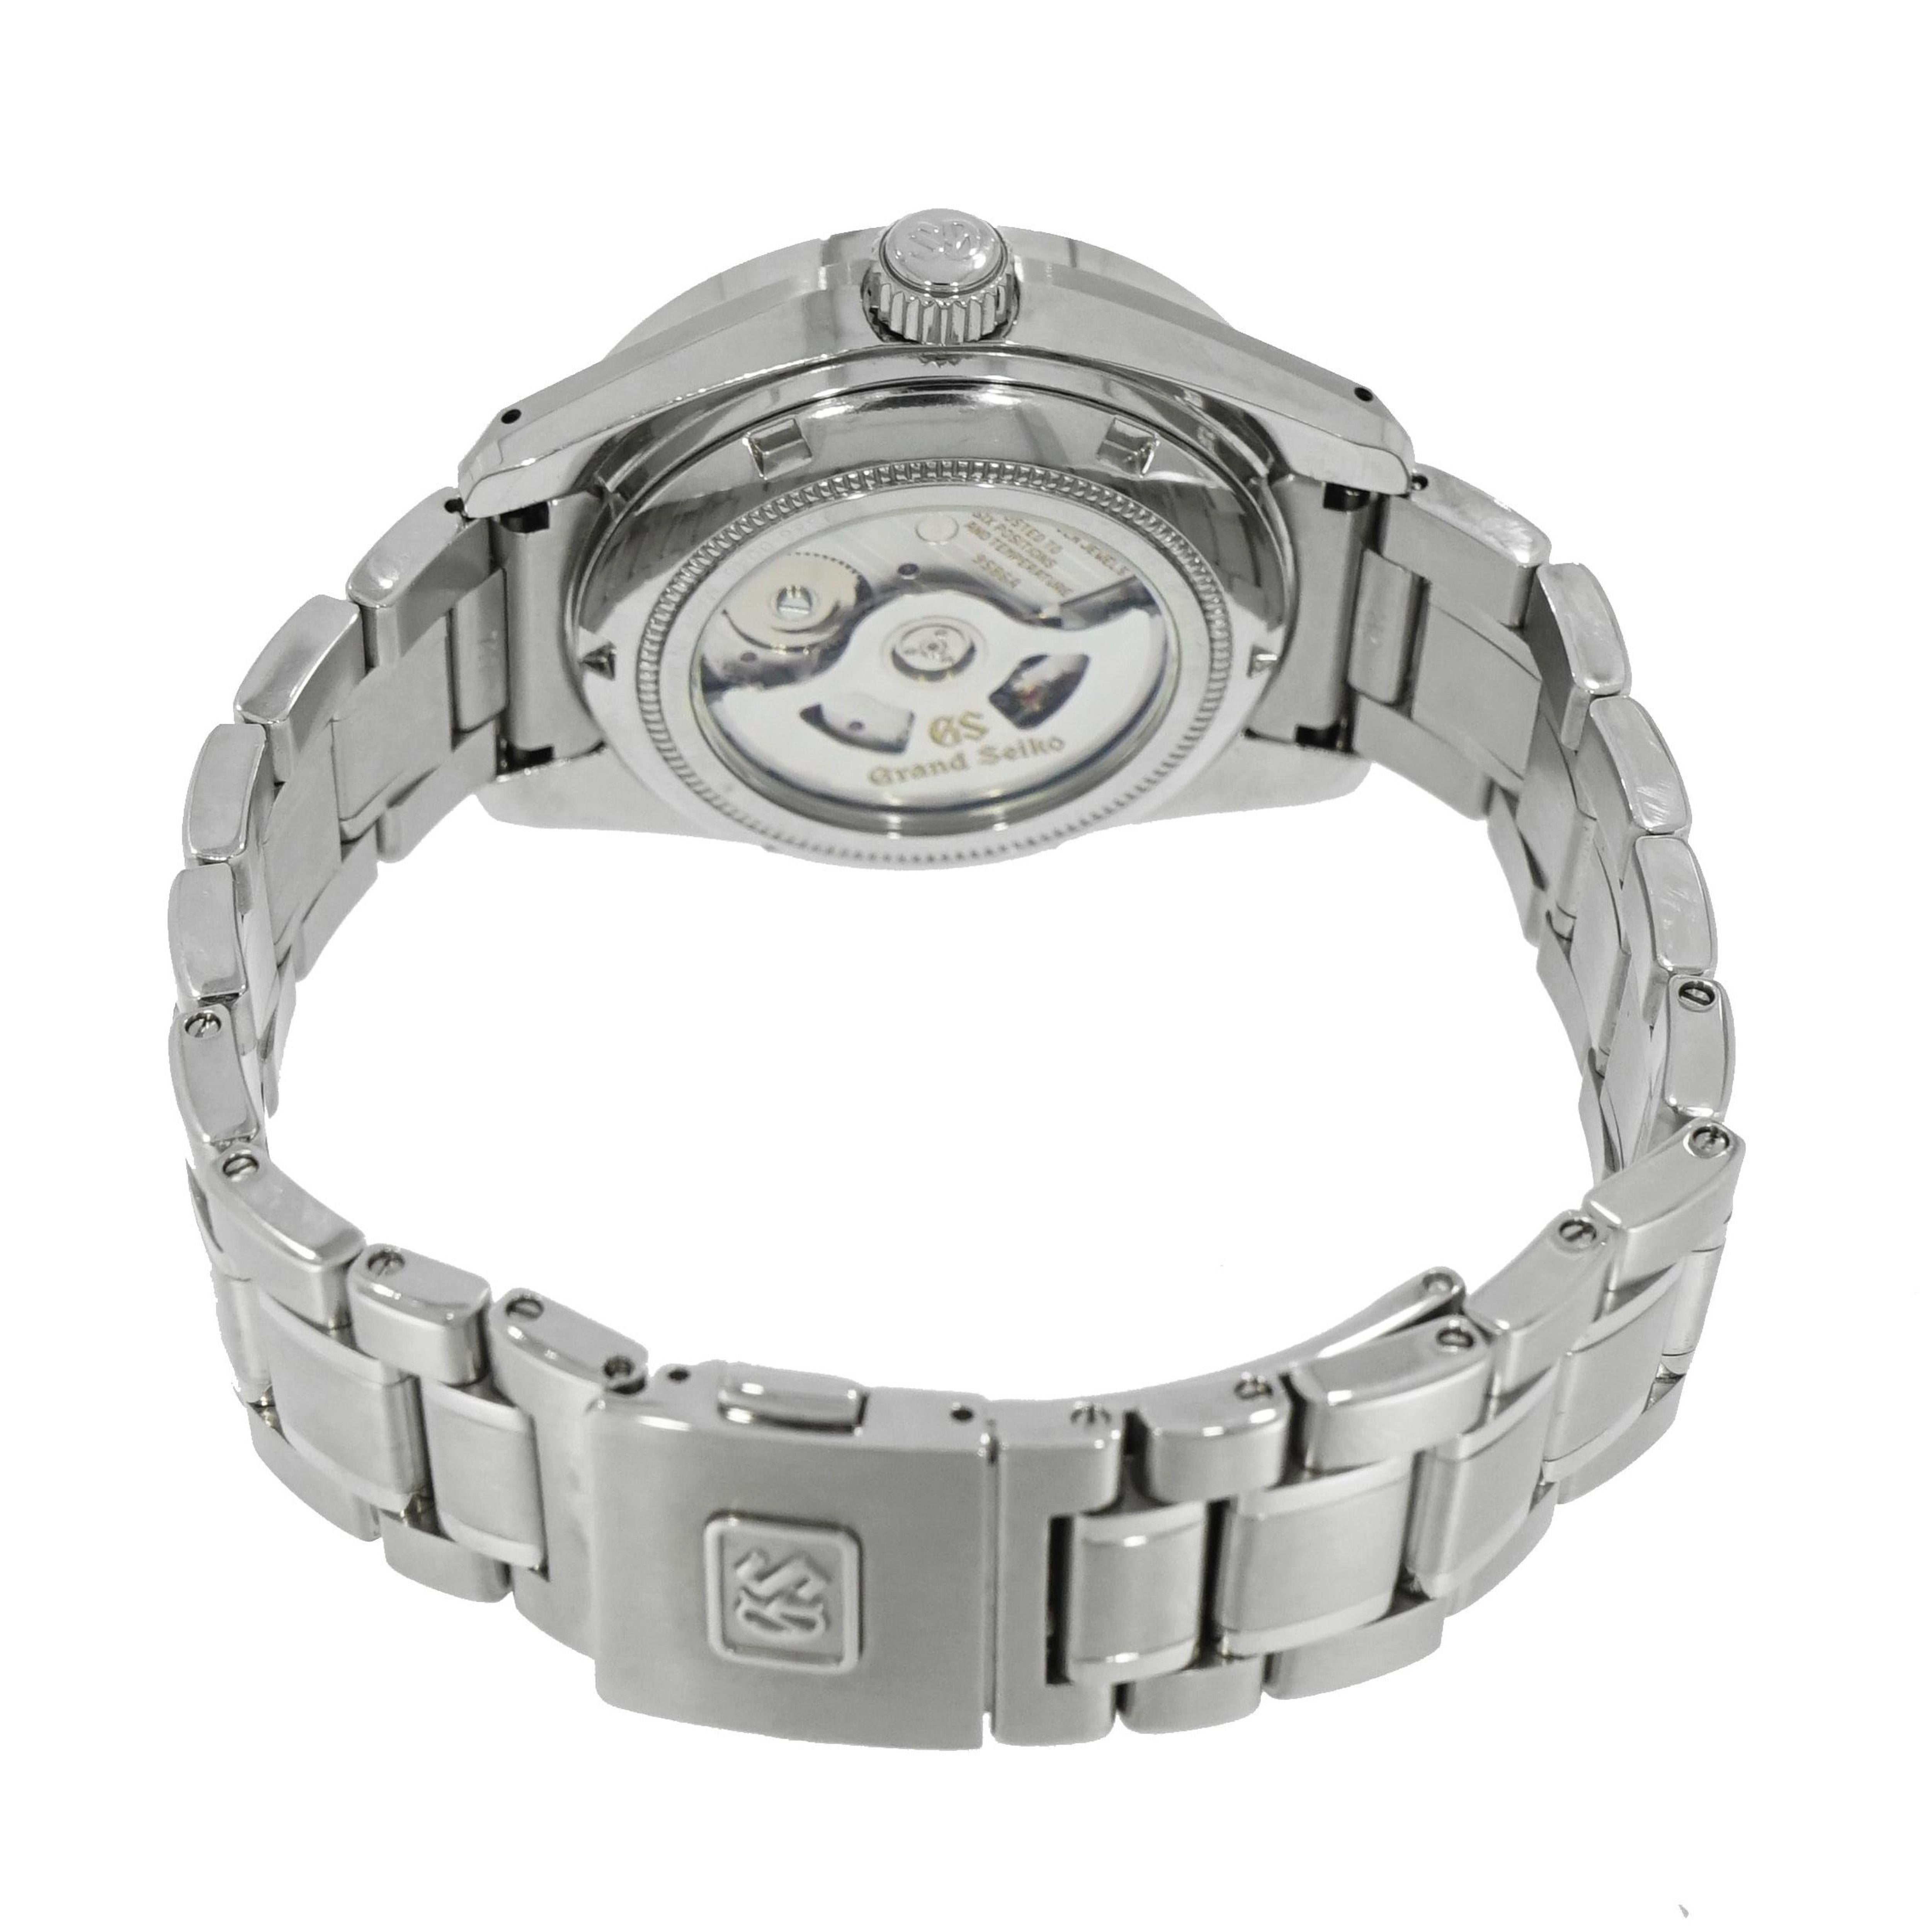 Modern Grand Seiko GMT Stainless Steel Watch